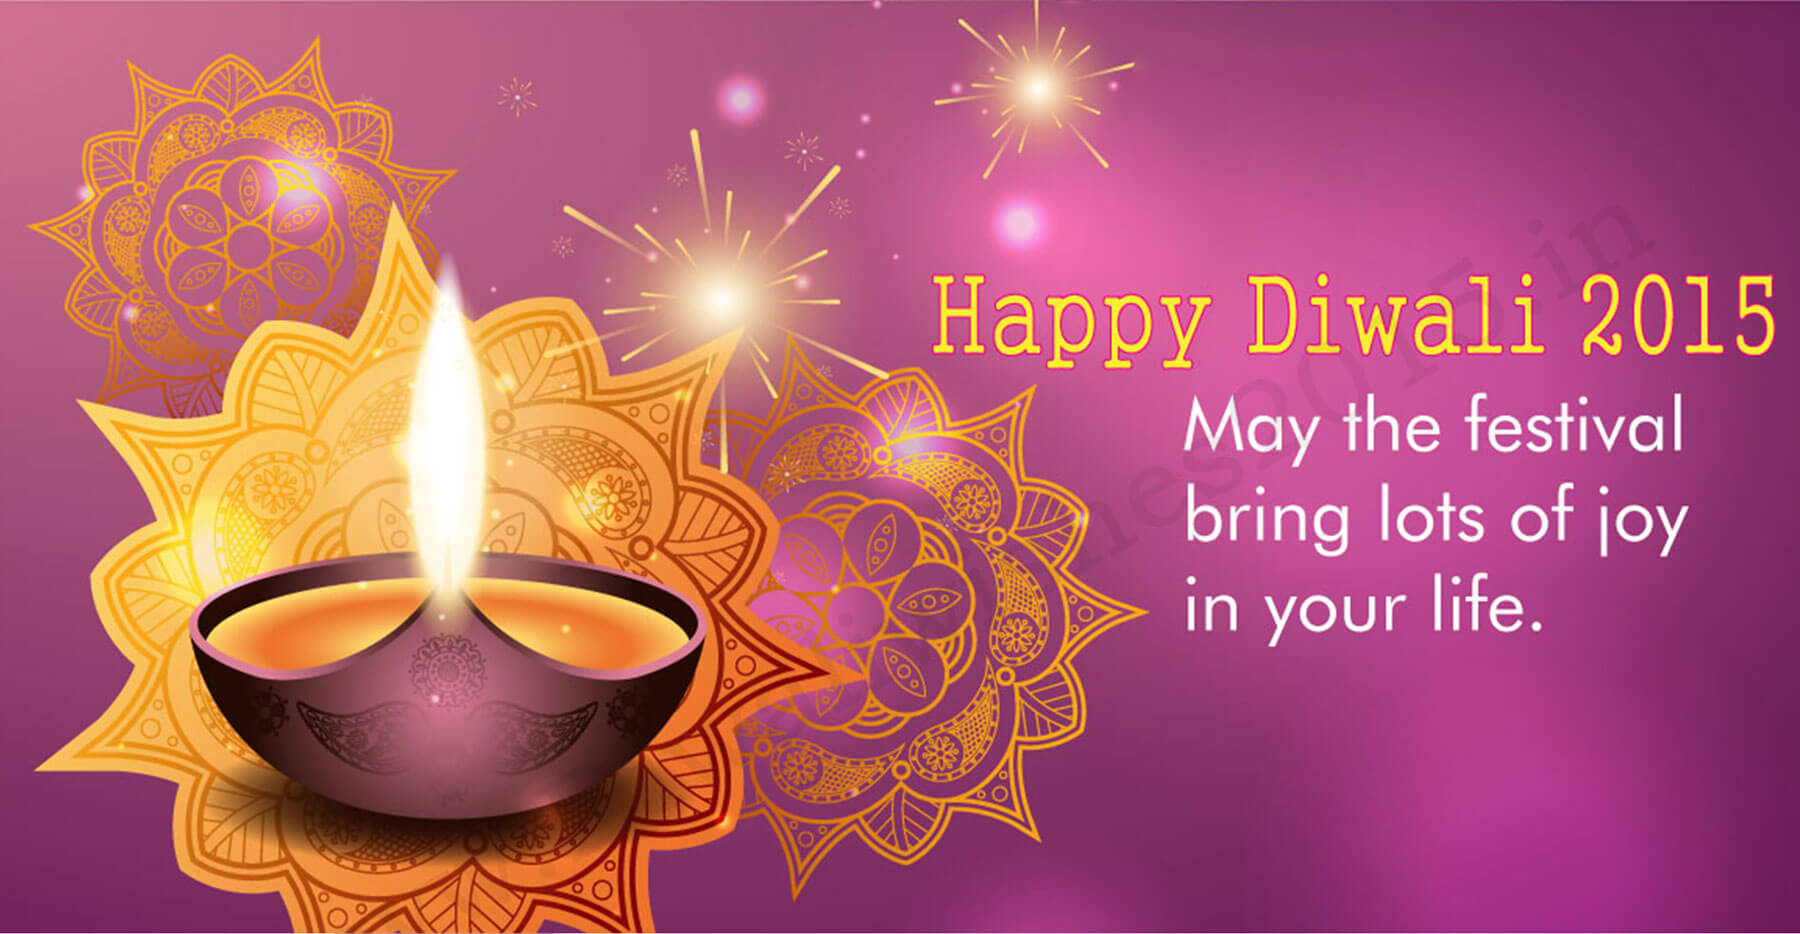 Download-Happy-Diwali-2015-HD-Wallpapers-facebook-mobile-desktop-cgfrog-2